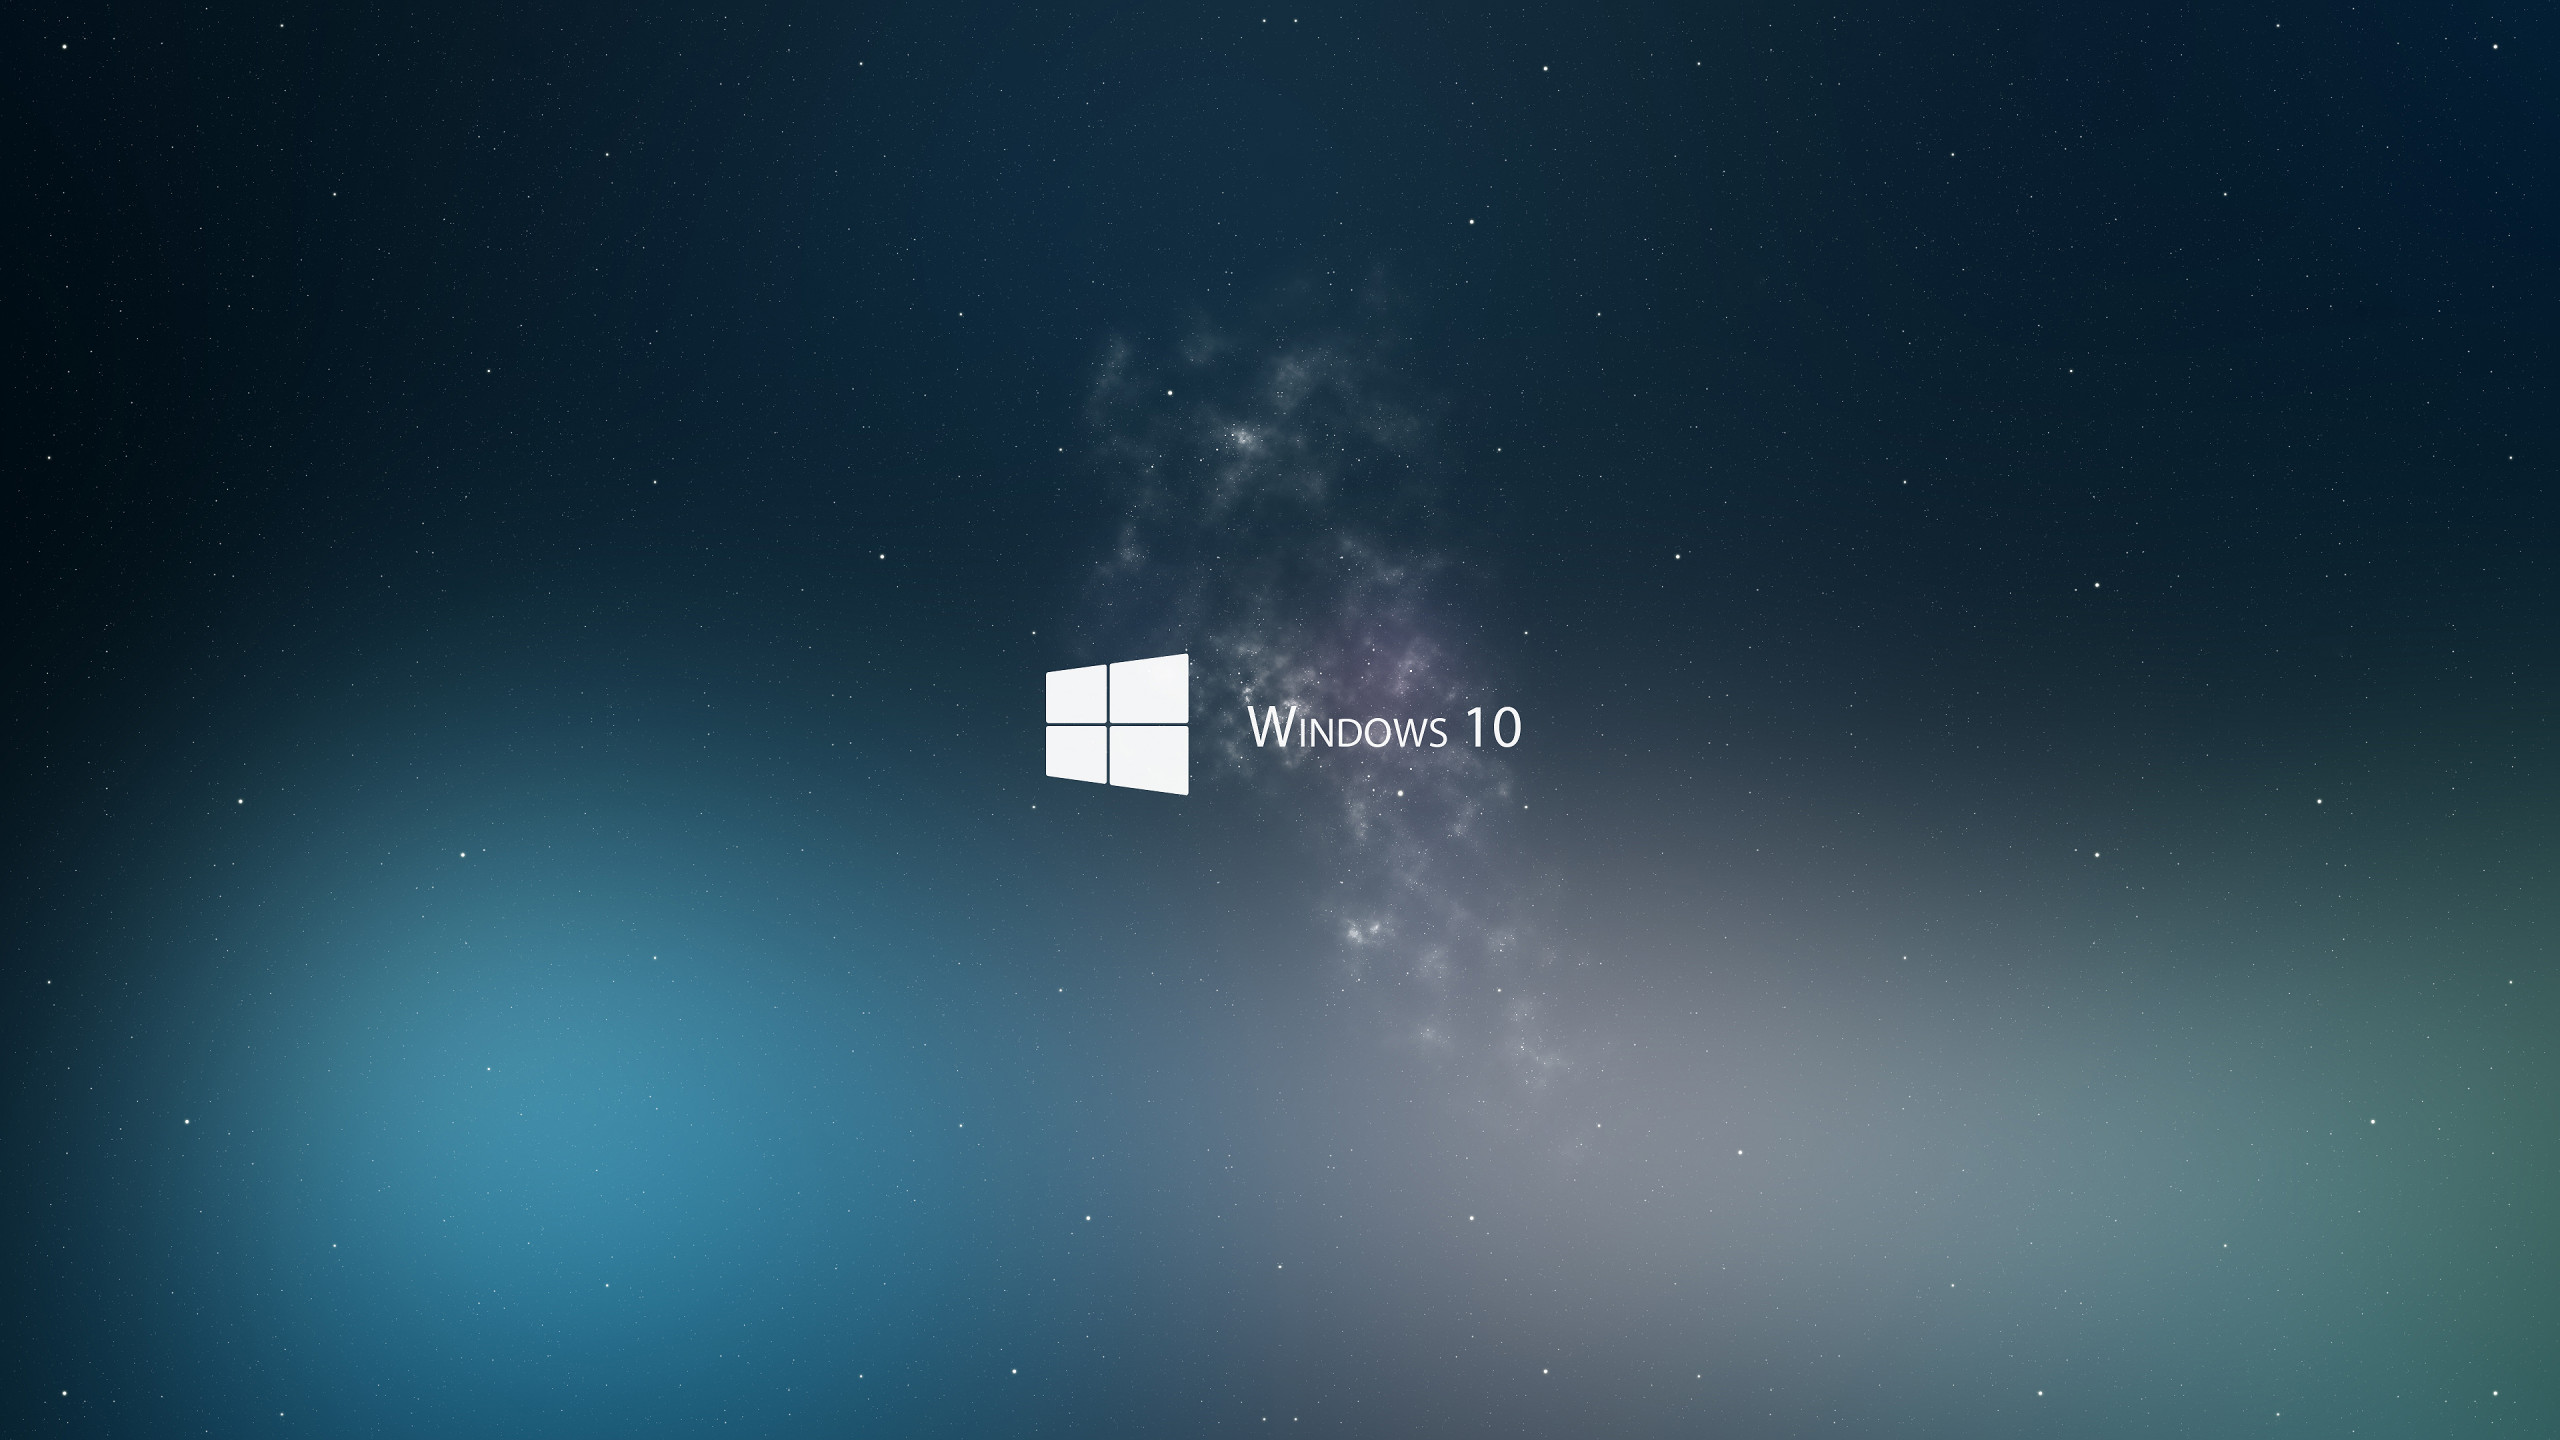 Wallpaper Windows 10 4k 5k Wallpaper Microsoft Blue Os 6995